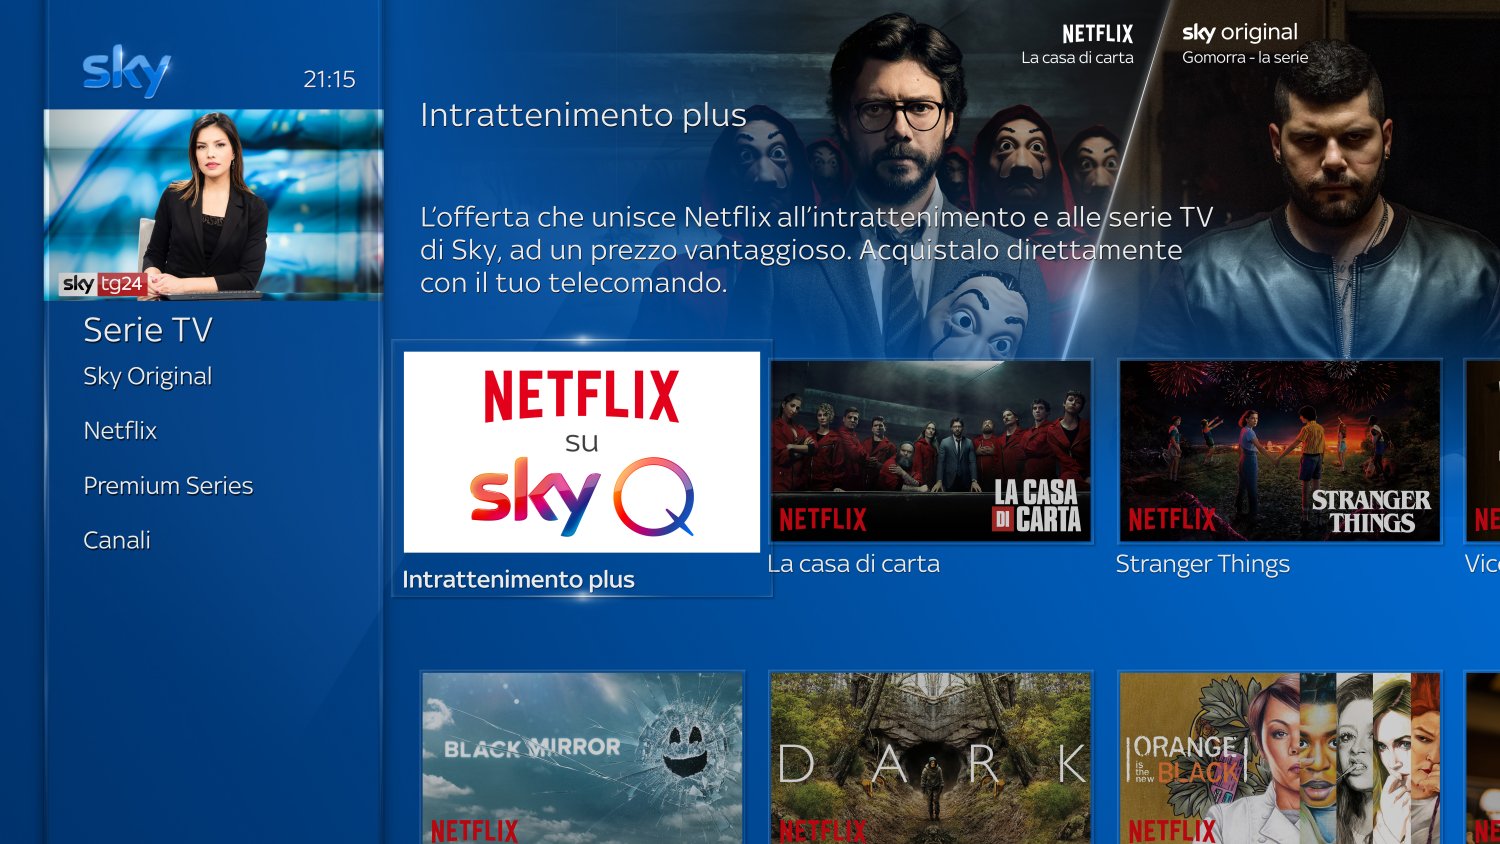 Sky e Netflix: dal 9 ottobre al via la partnership in Italia